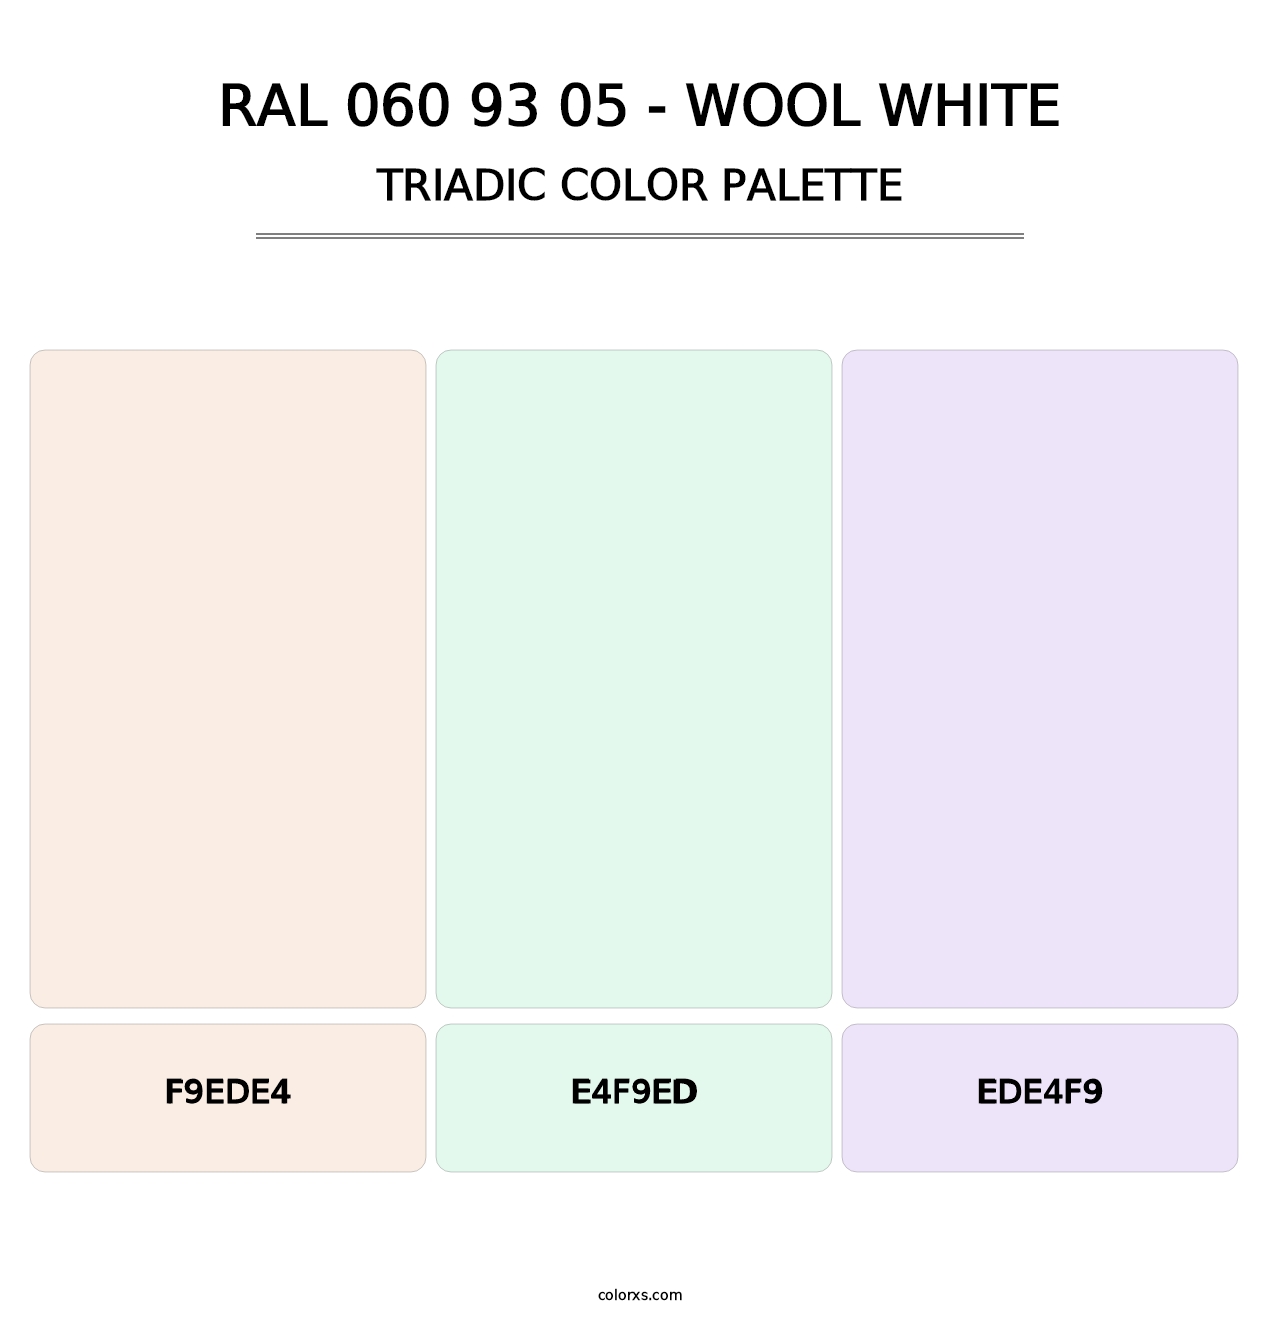 RAL 060 93 05 - Wool White - Triadic Color Palette